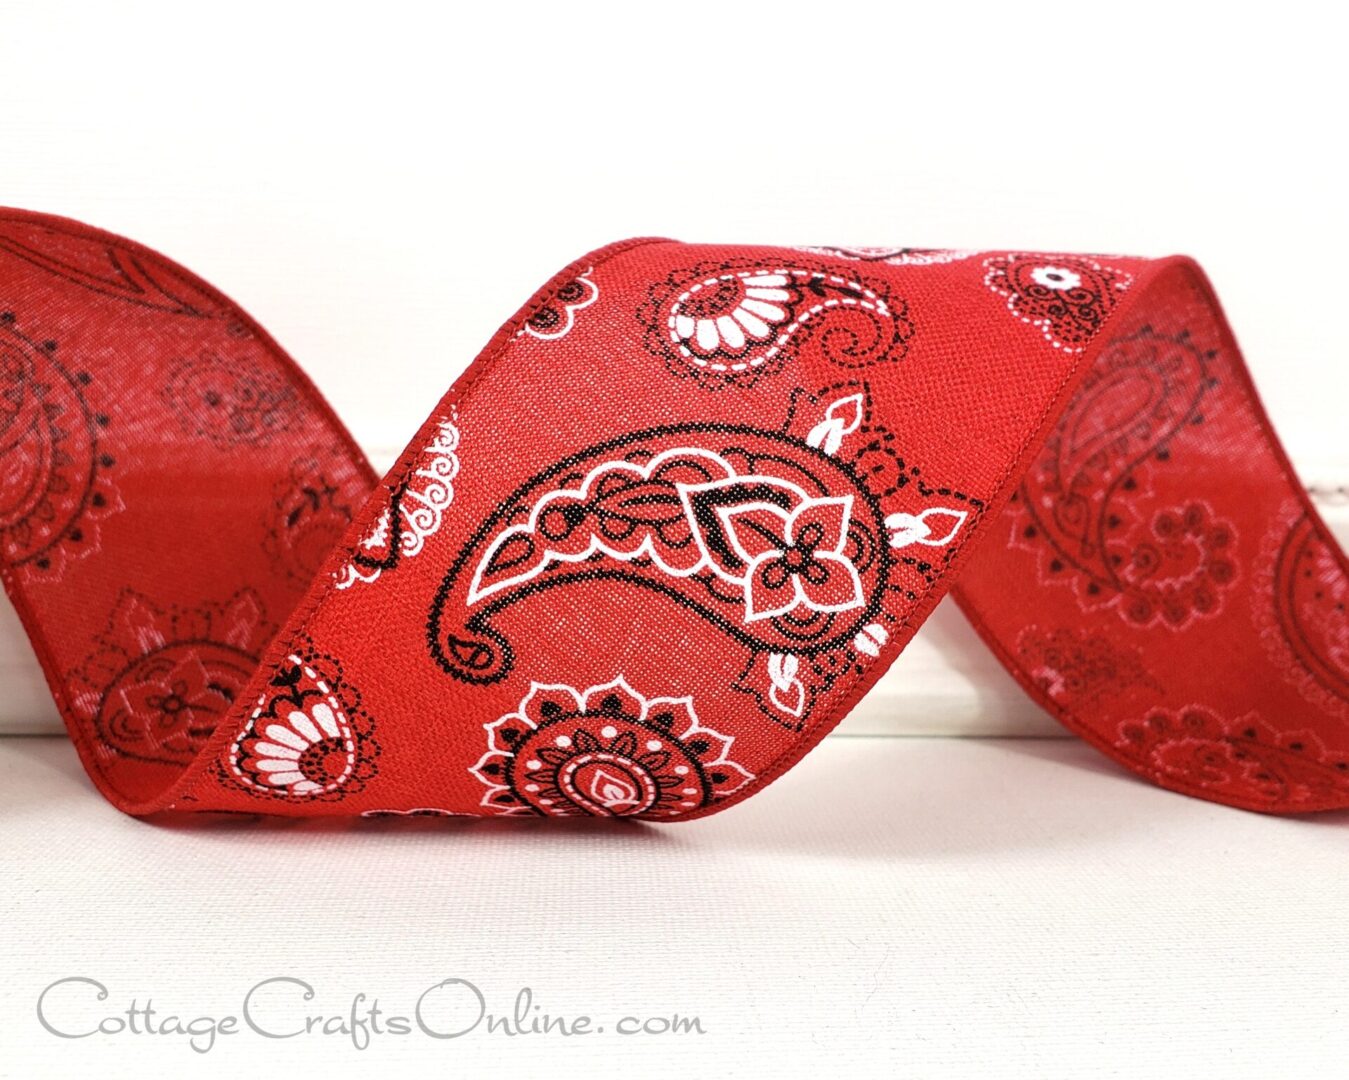 A red ribbon with bandana prints